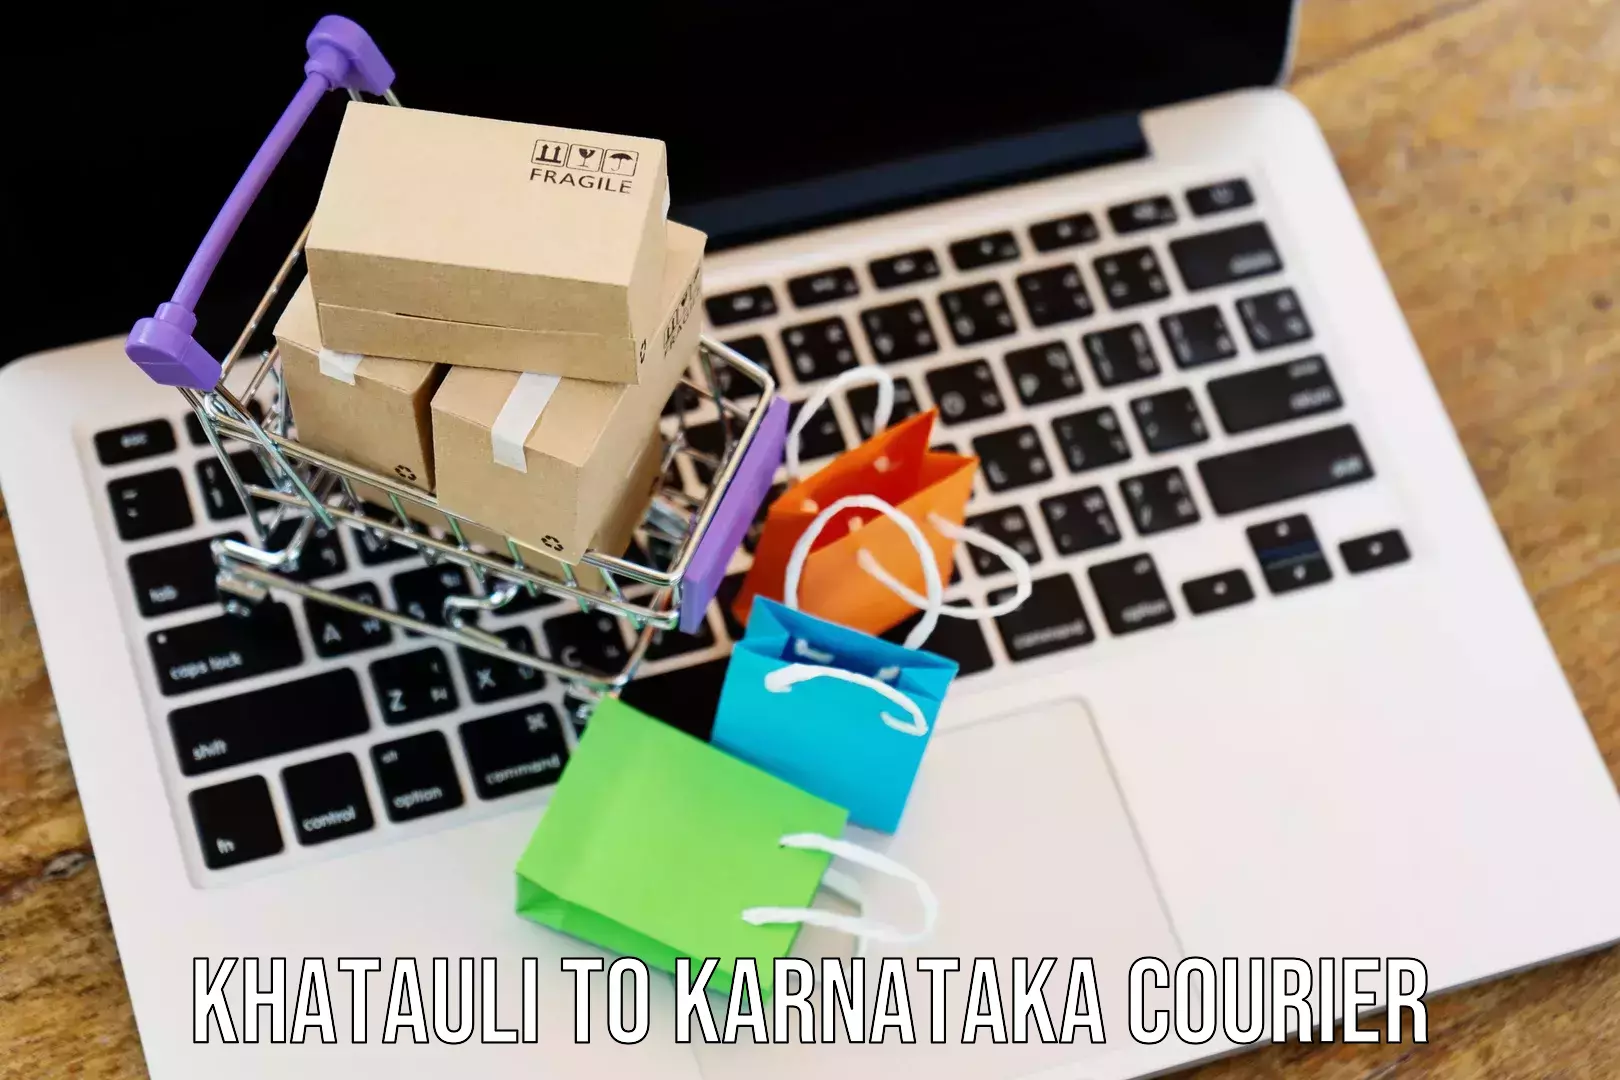 End-to-end delivery Khatauli to Karnataka